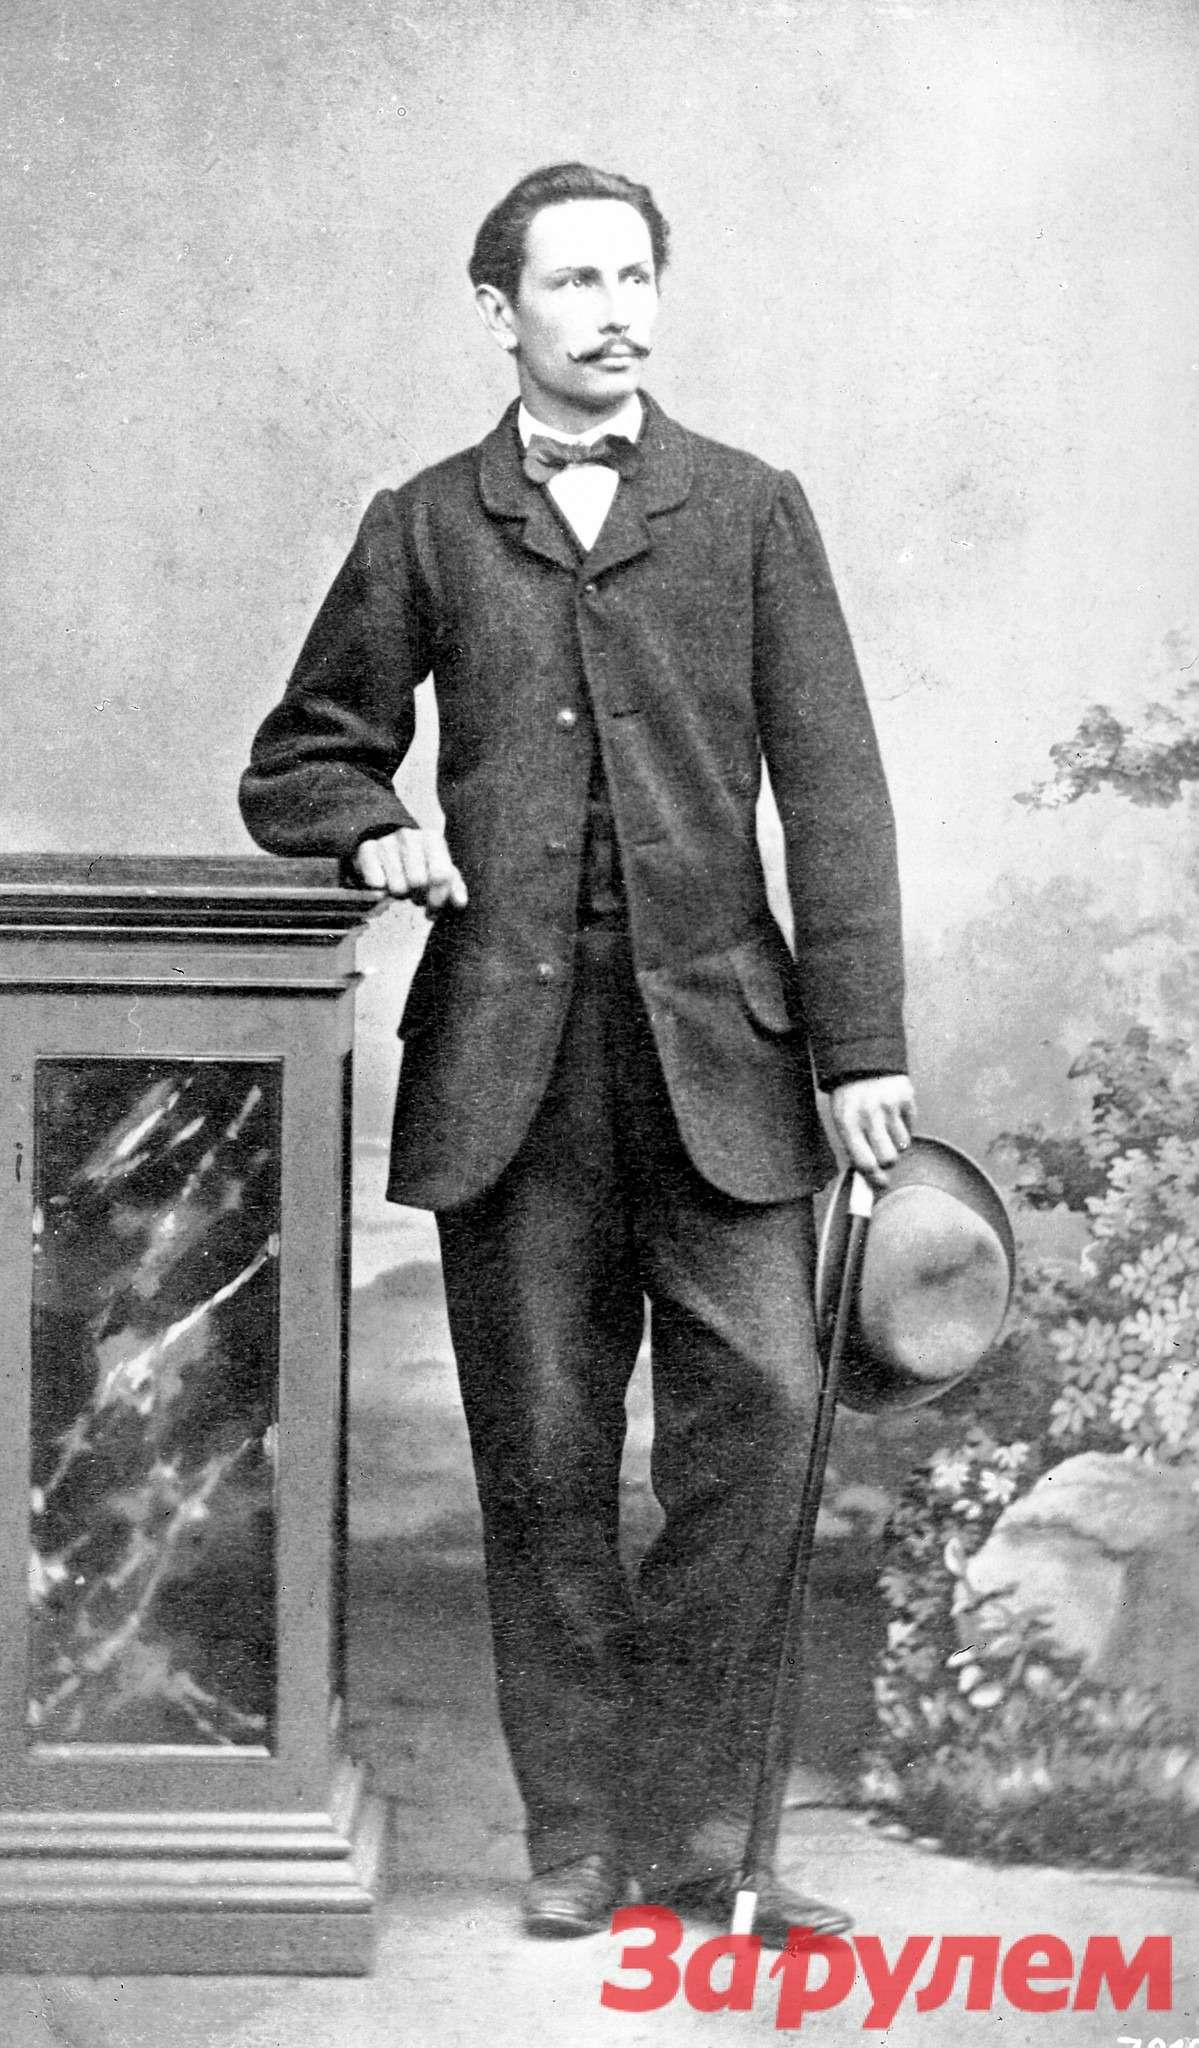 Карл Бенц (26.11.1844 — 04.04.1929) — изобретатель автомобиля